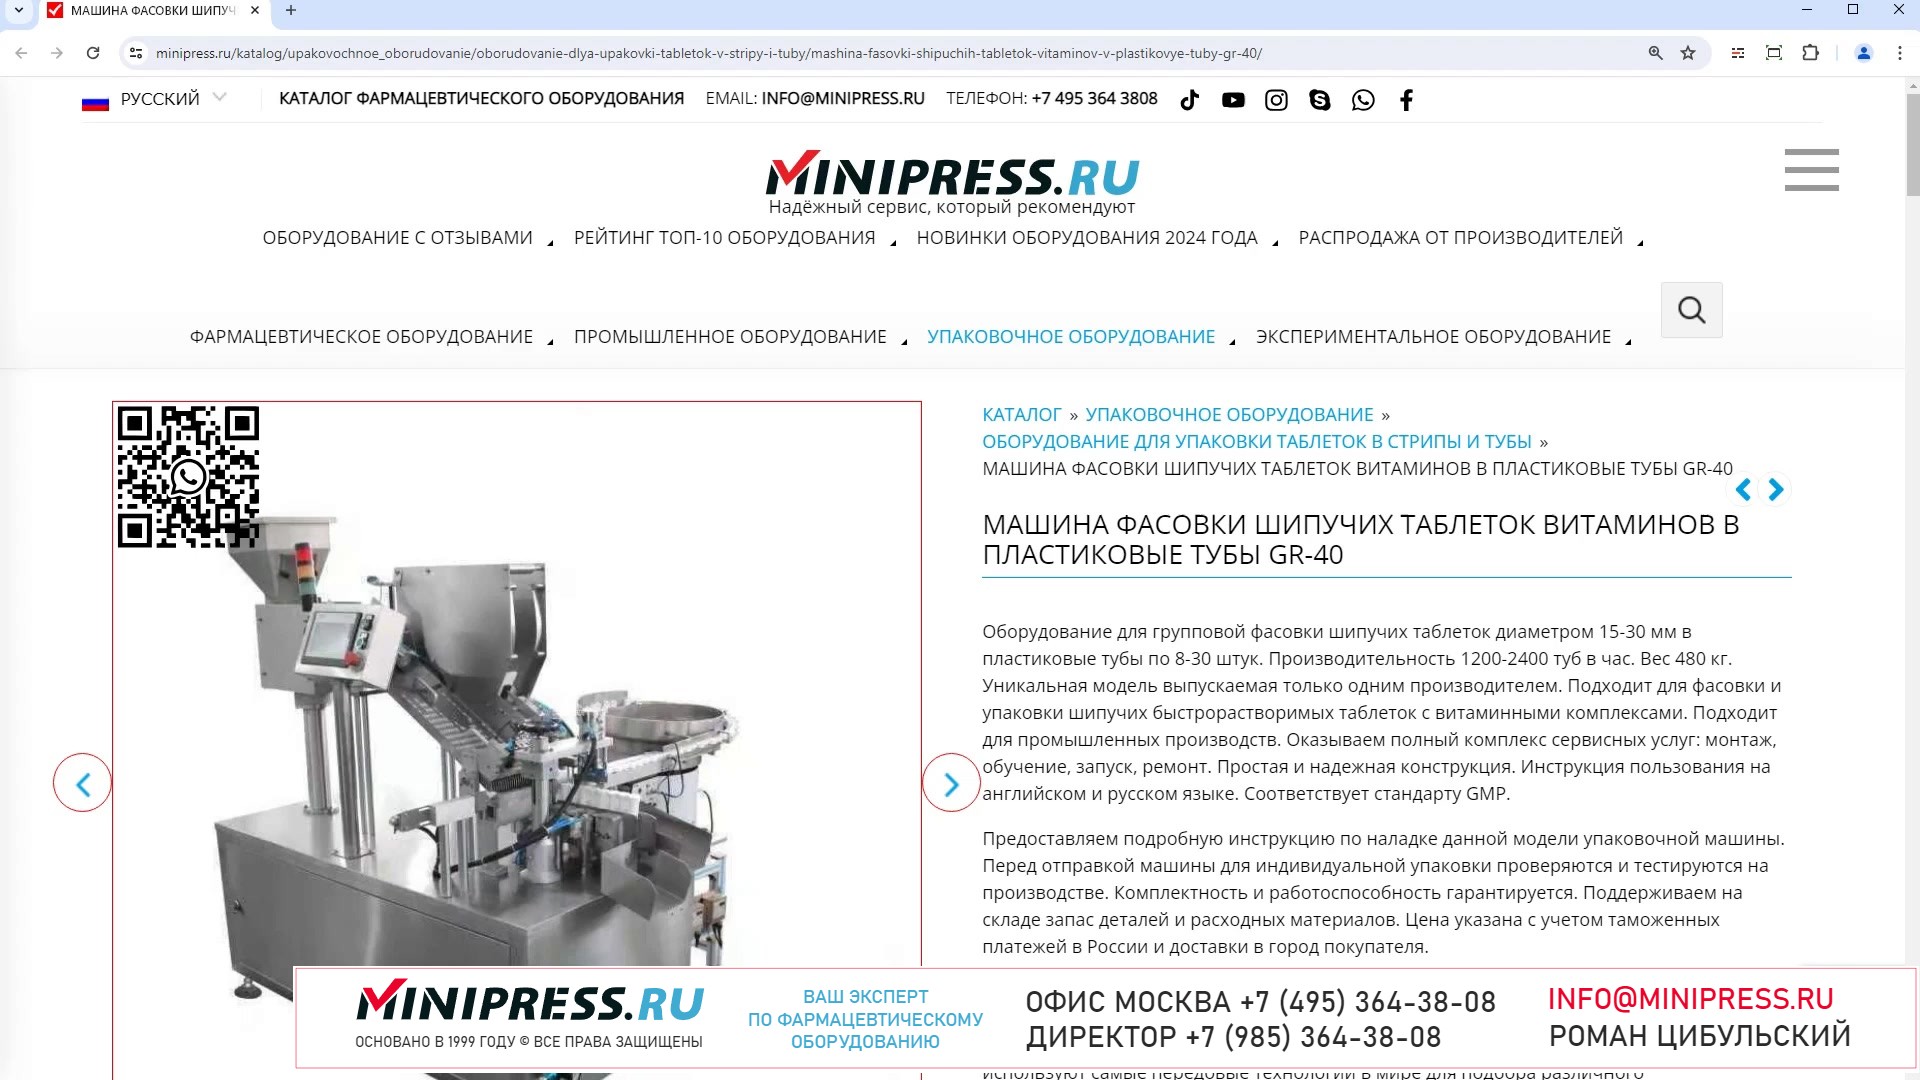 Minipress.ru Машина фасовки шипучих таблеток витаминов в пластиковые тубы GR-40